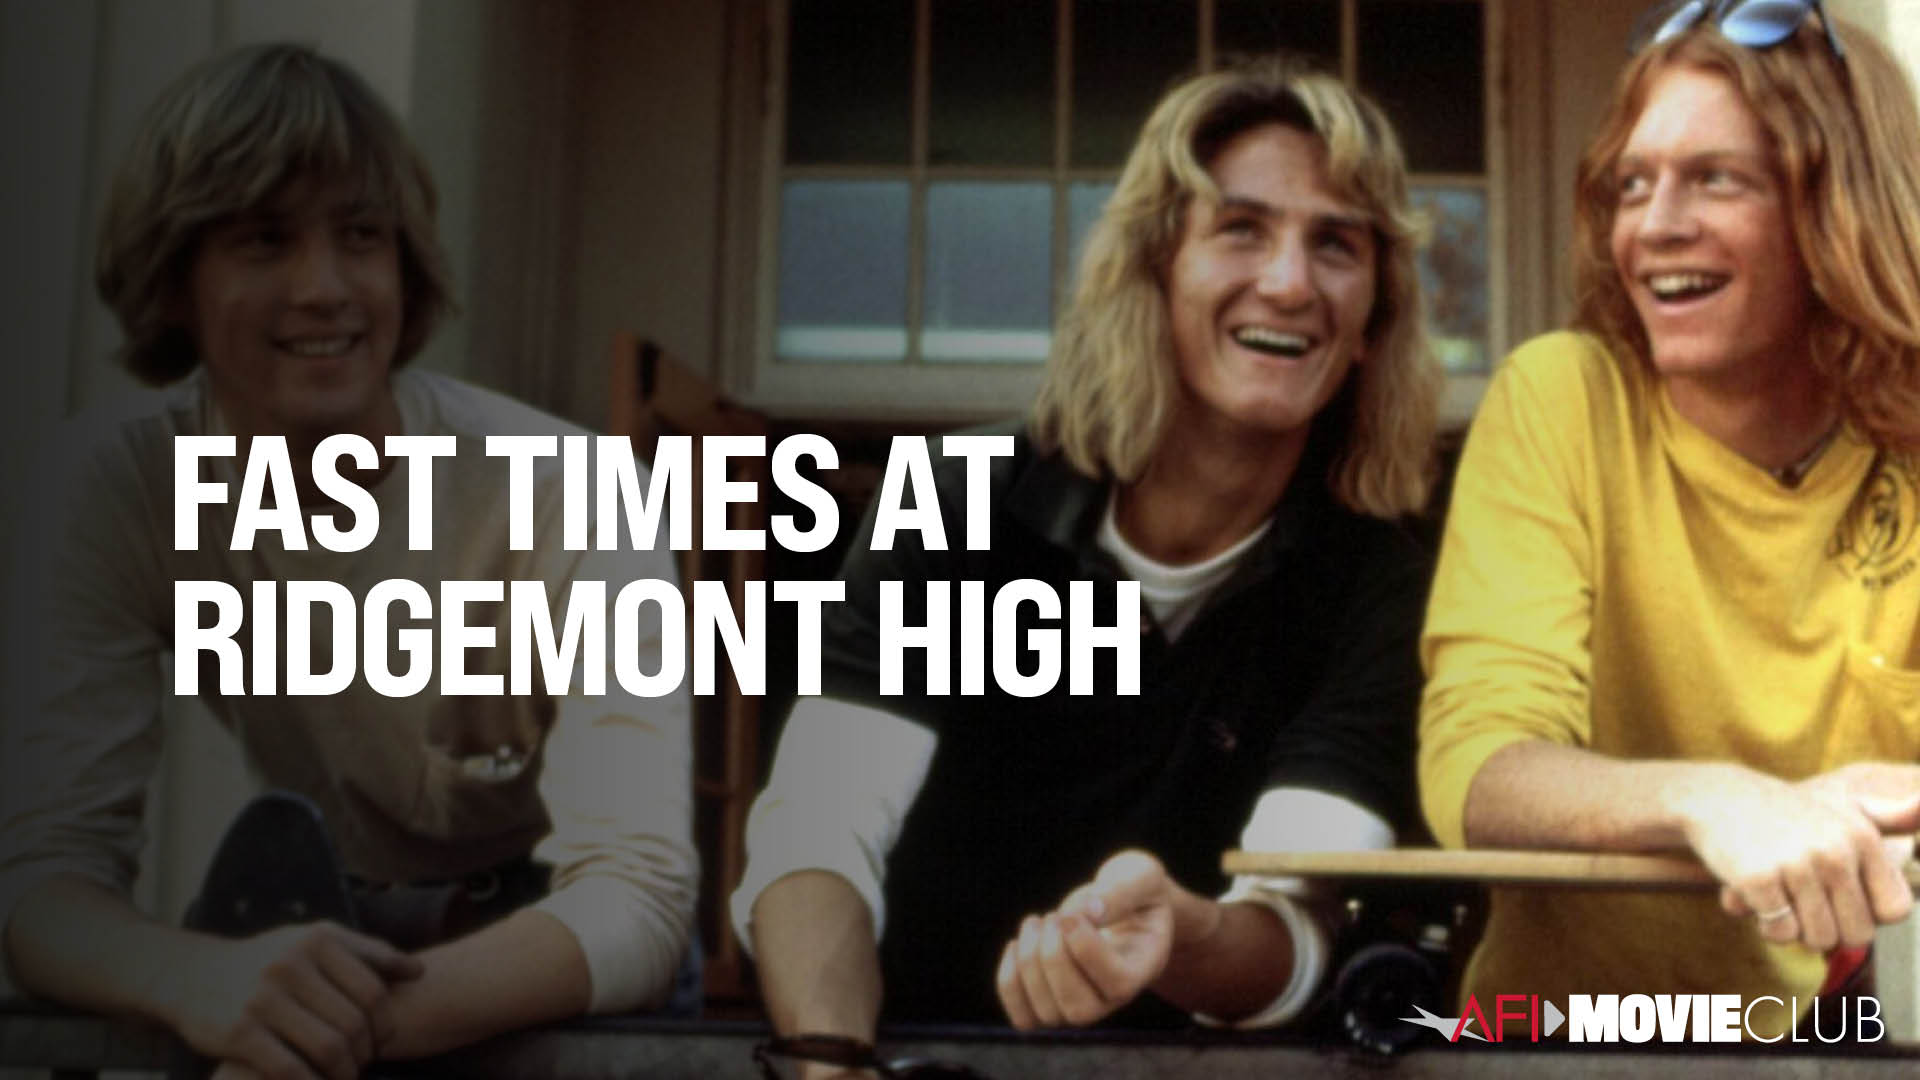 Fast Times at Ridgemont High Film Still - Anthony Edwards, Sean Penn, and Eric Stoltz